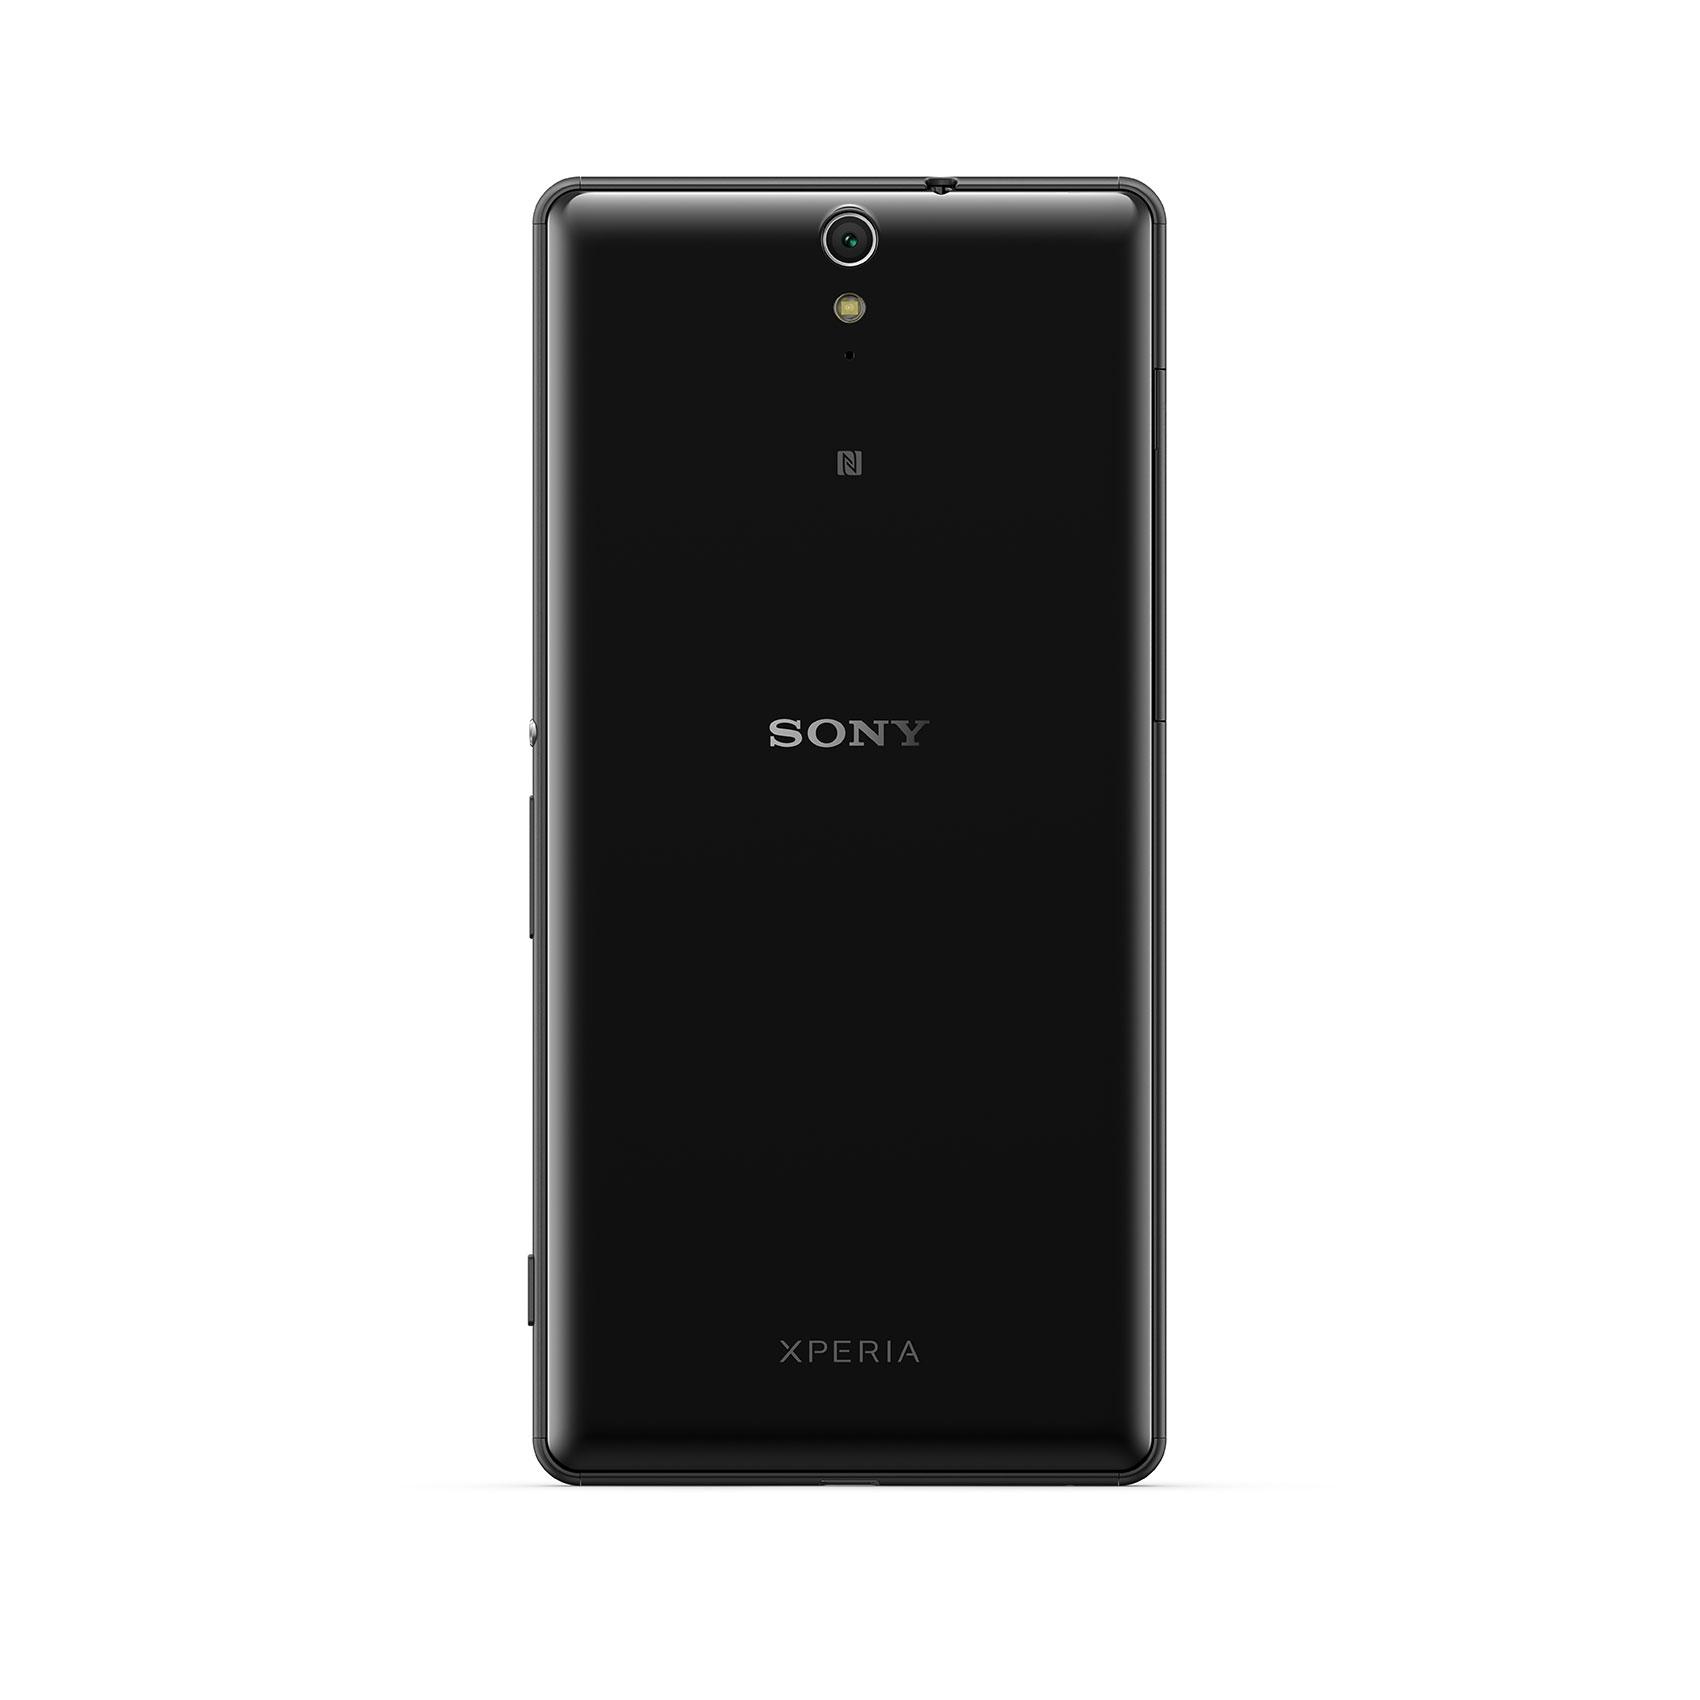 Sony Xperia C5 Ultra trasera en color negro